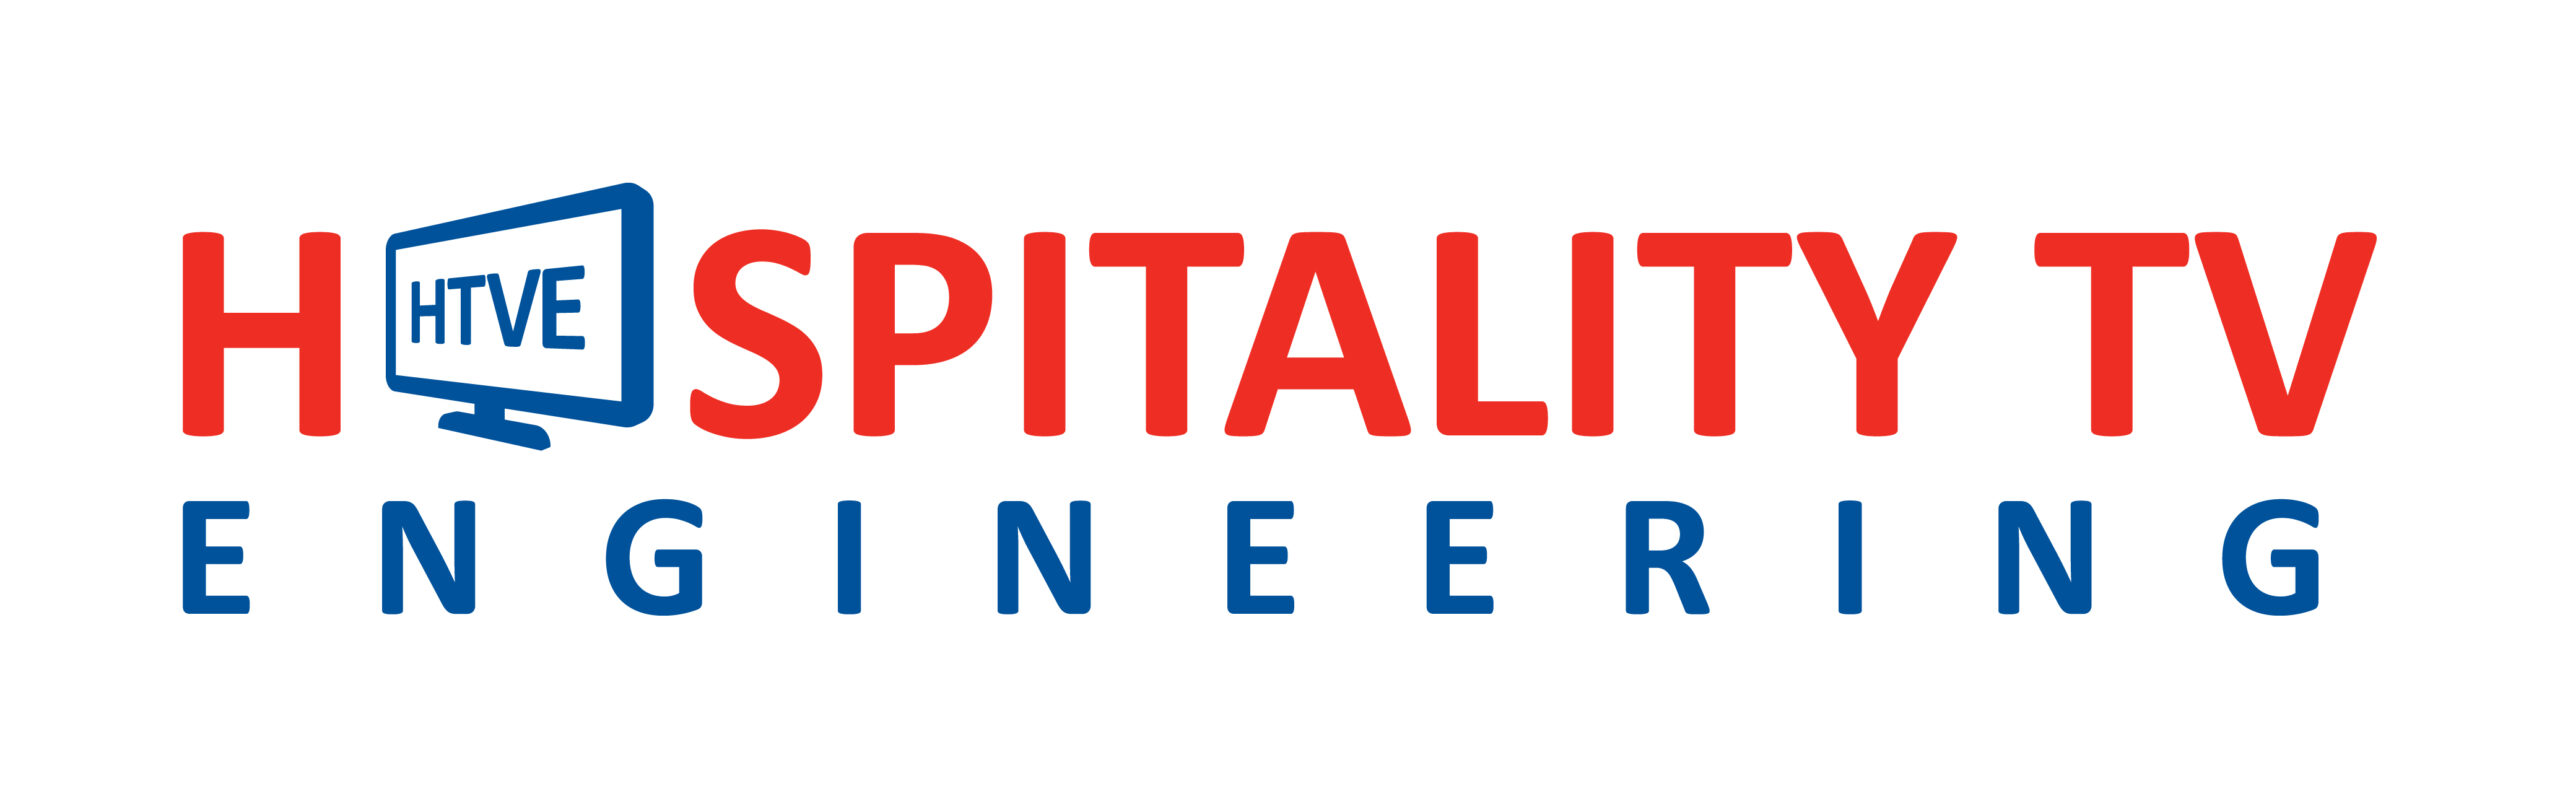 Hospitality TV Engineering Logo